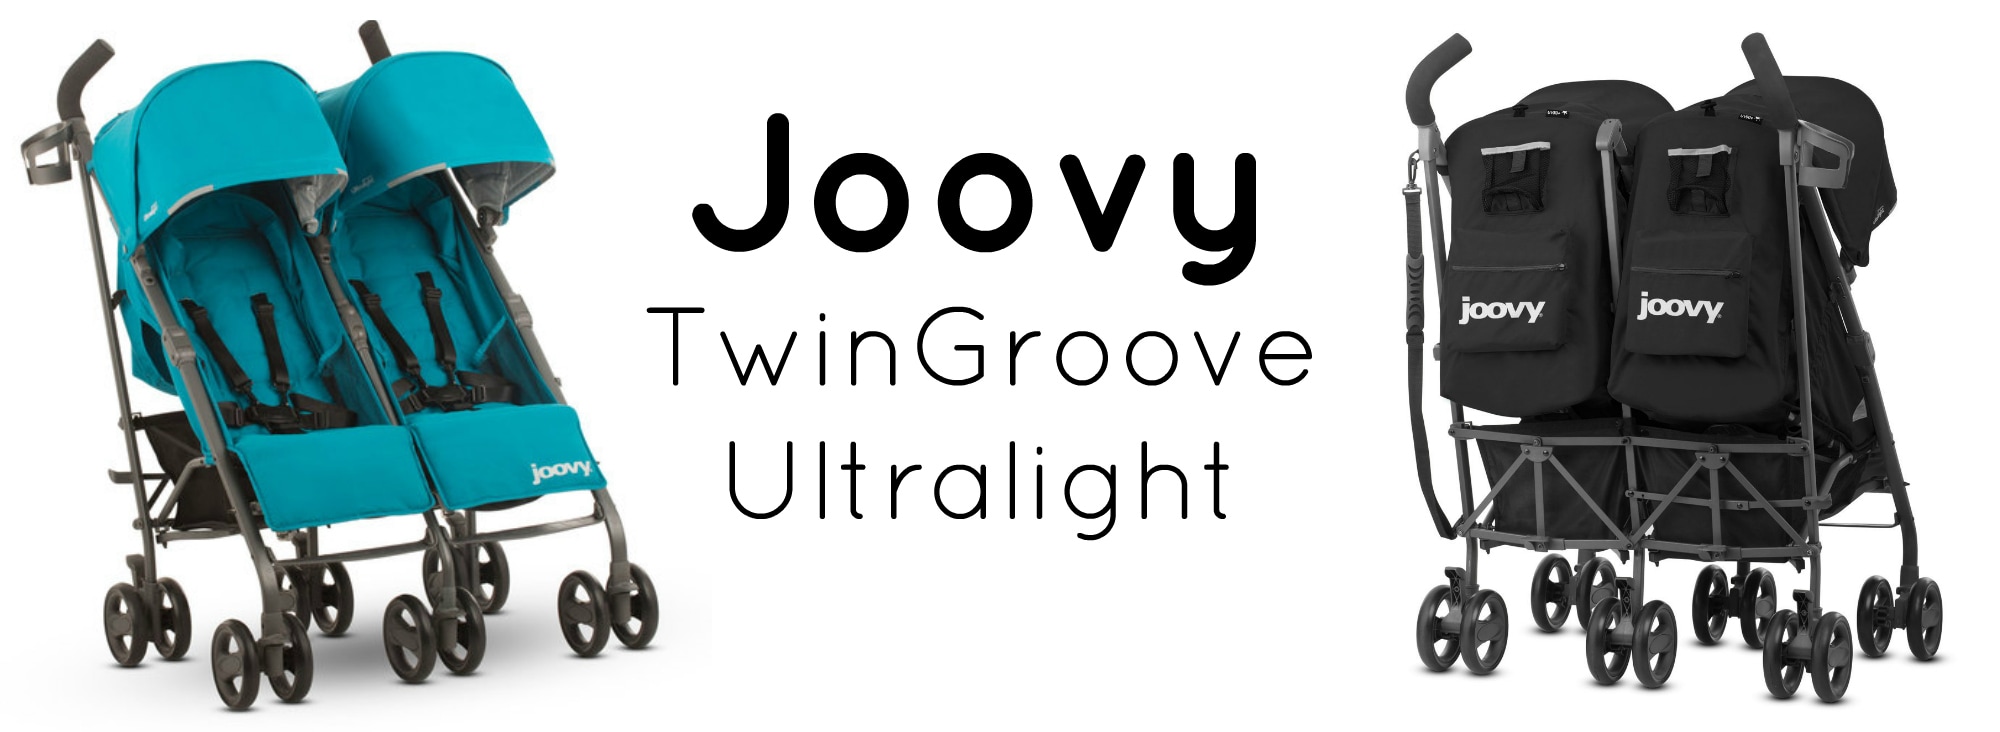 joovy twin groove ultralight umbrella stroller